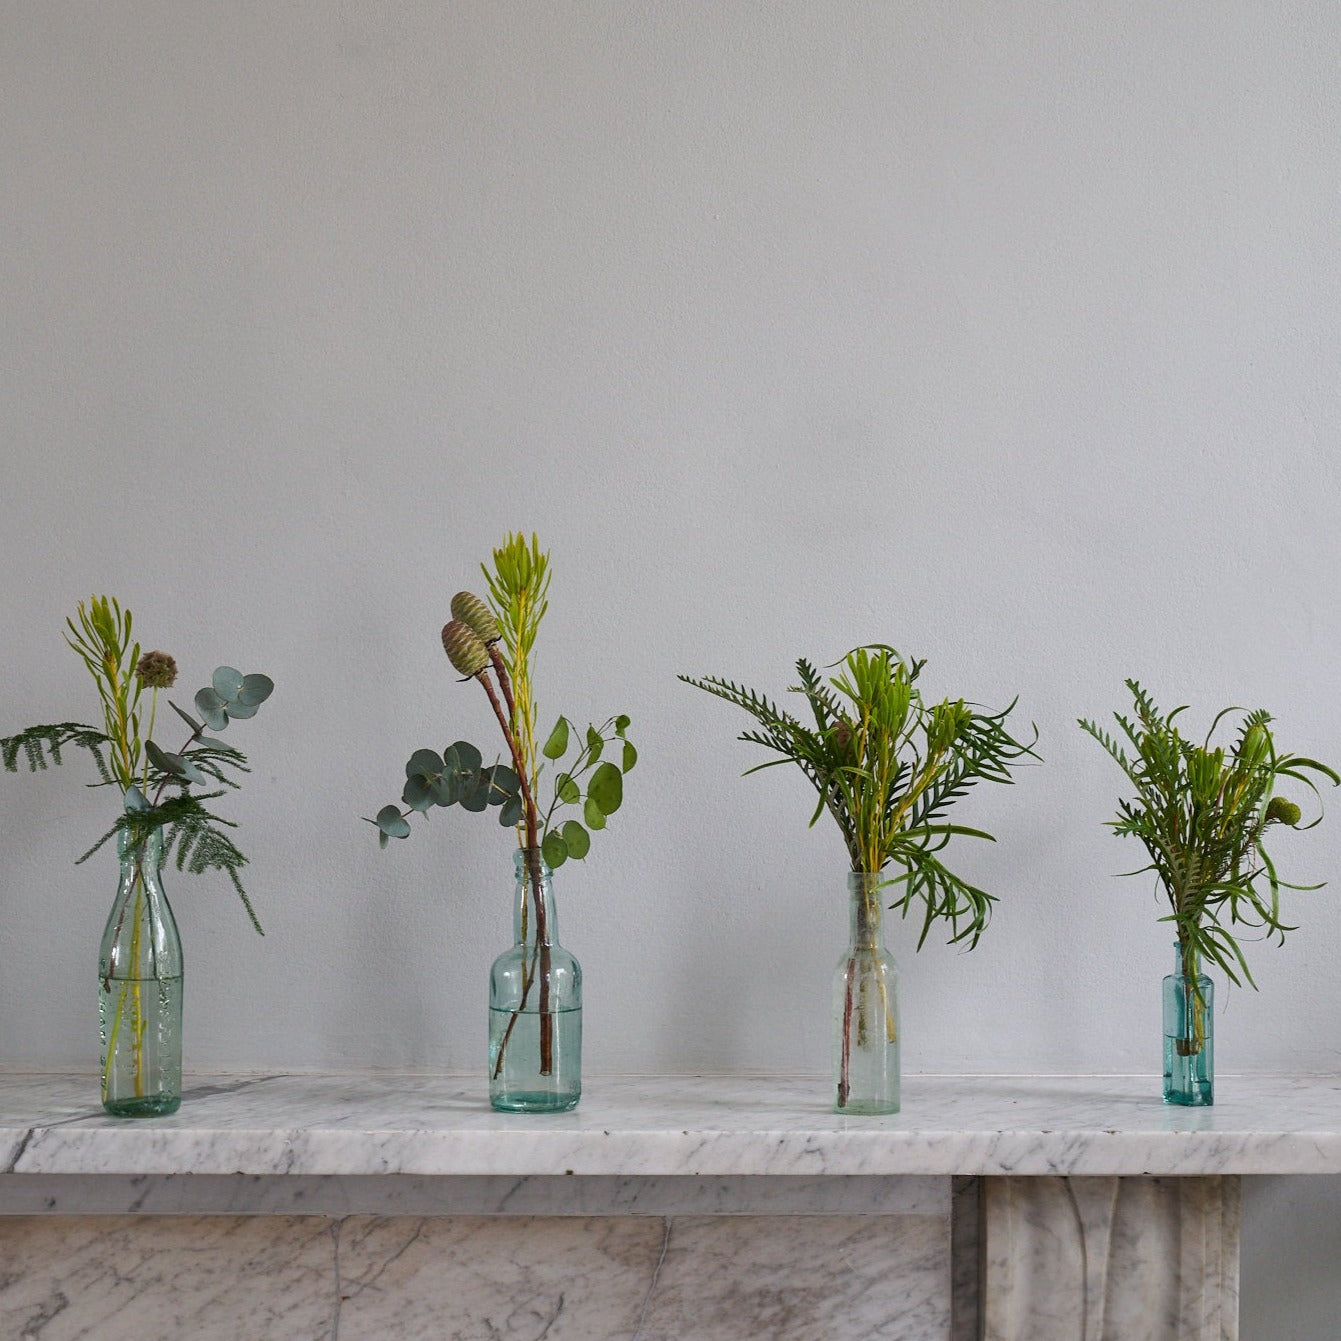 lush woodland bud vase arrangements for weddings and events